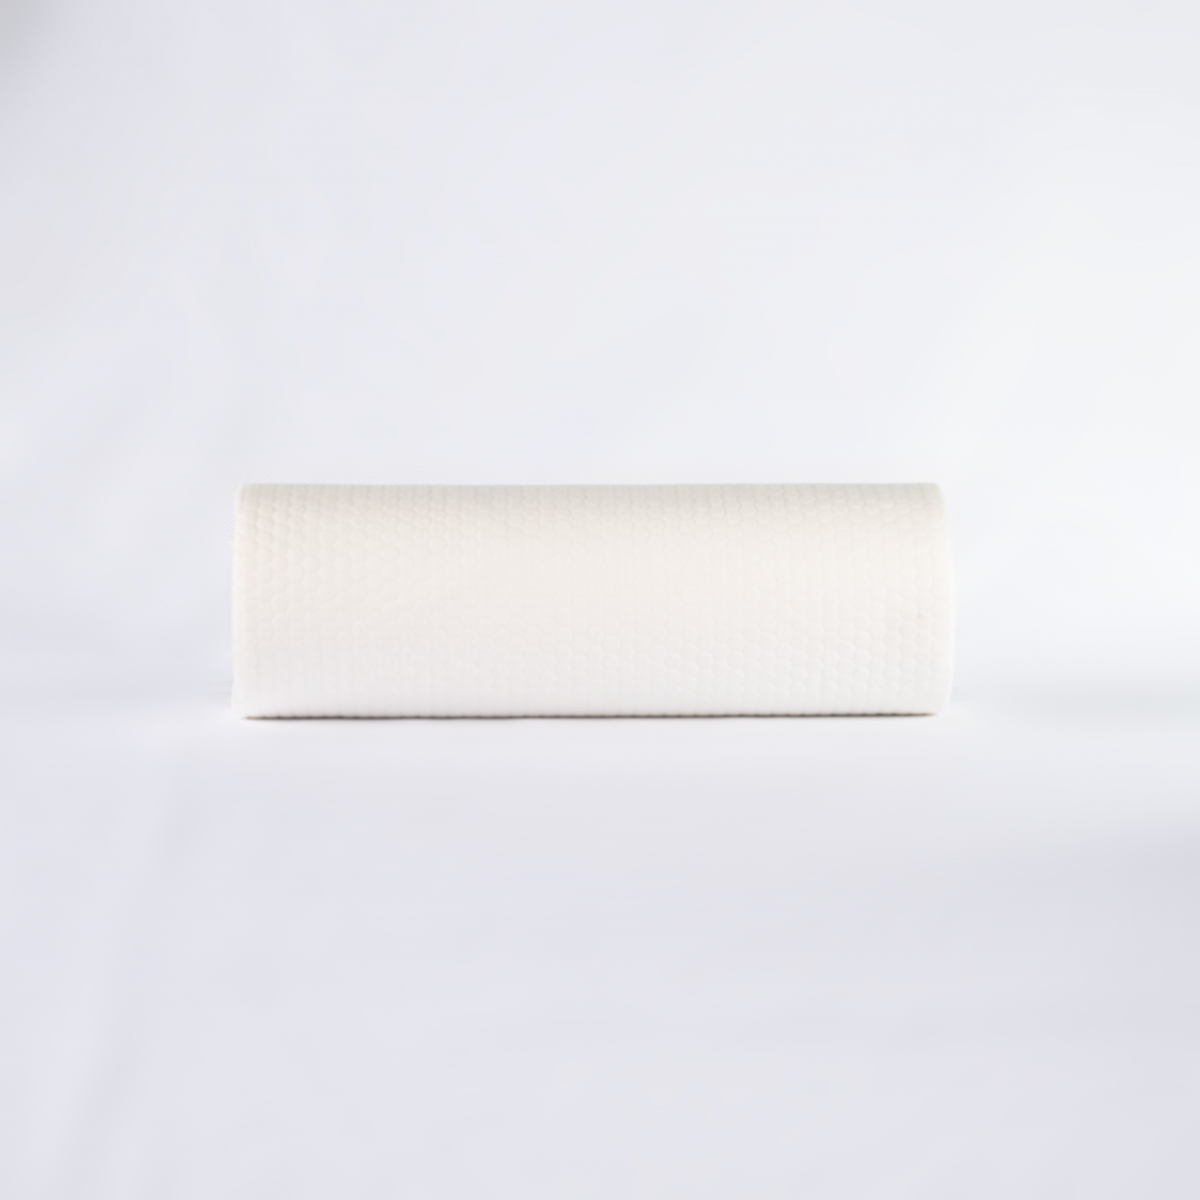 Disposable non woven paper towel WF-0007-kitchen textile,apron,oven mitt,pot holder,tea towel,hairdressing cape